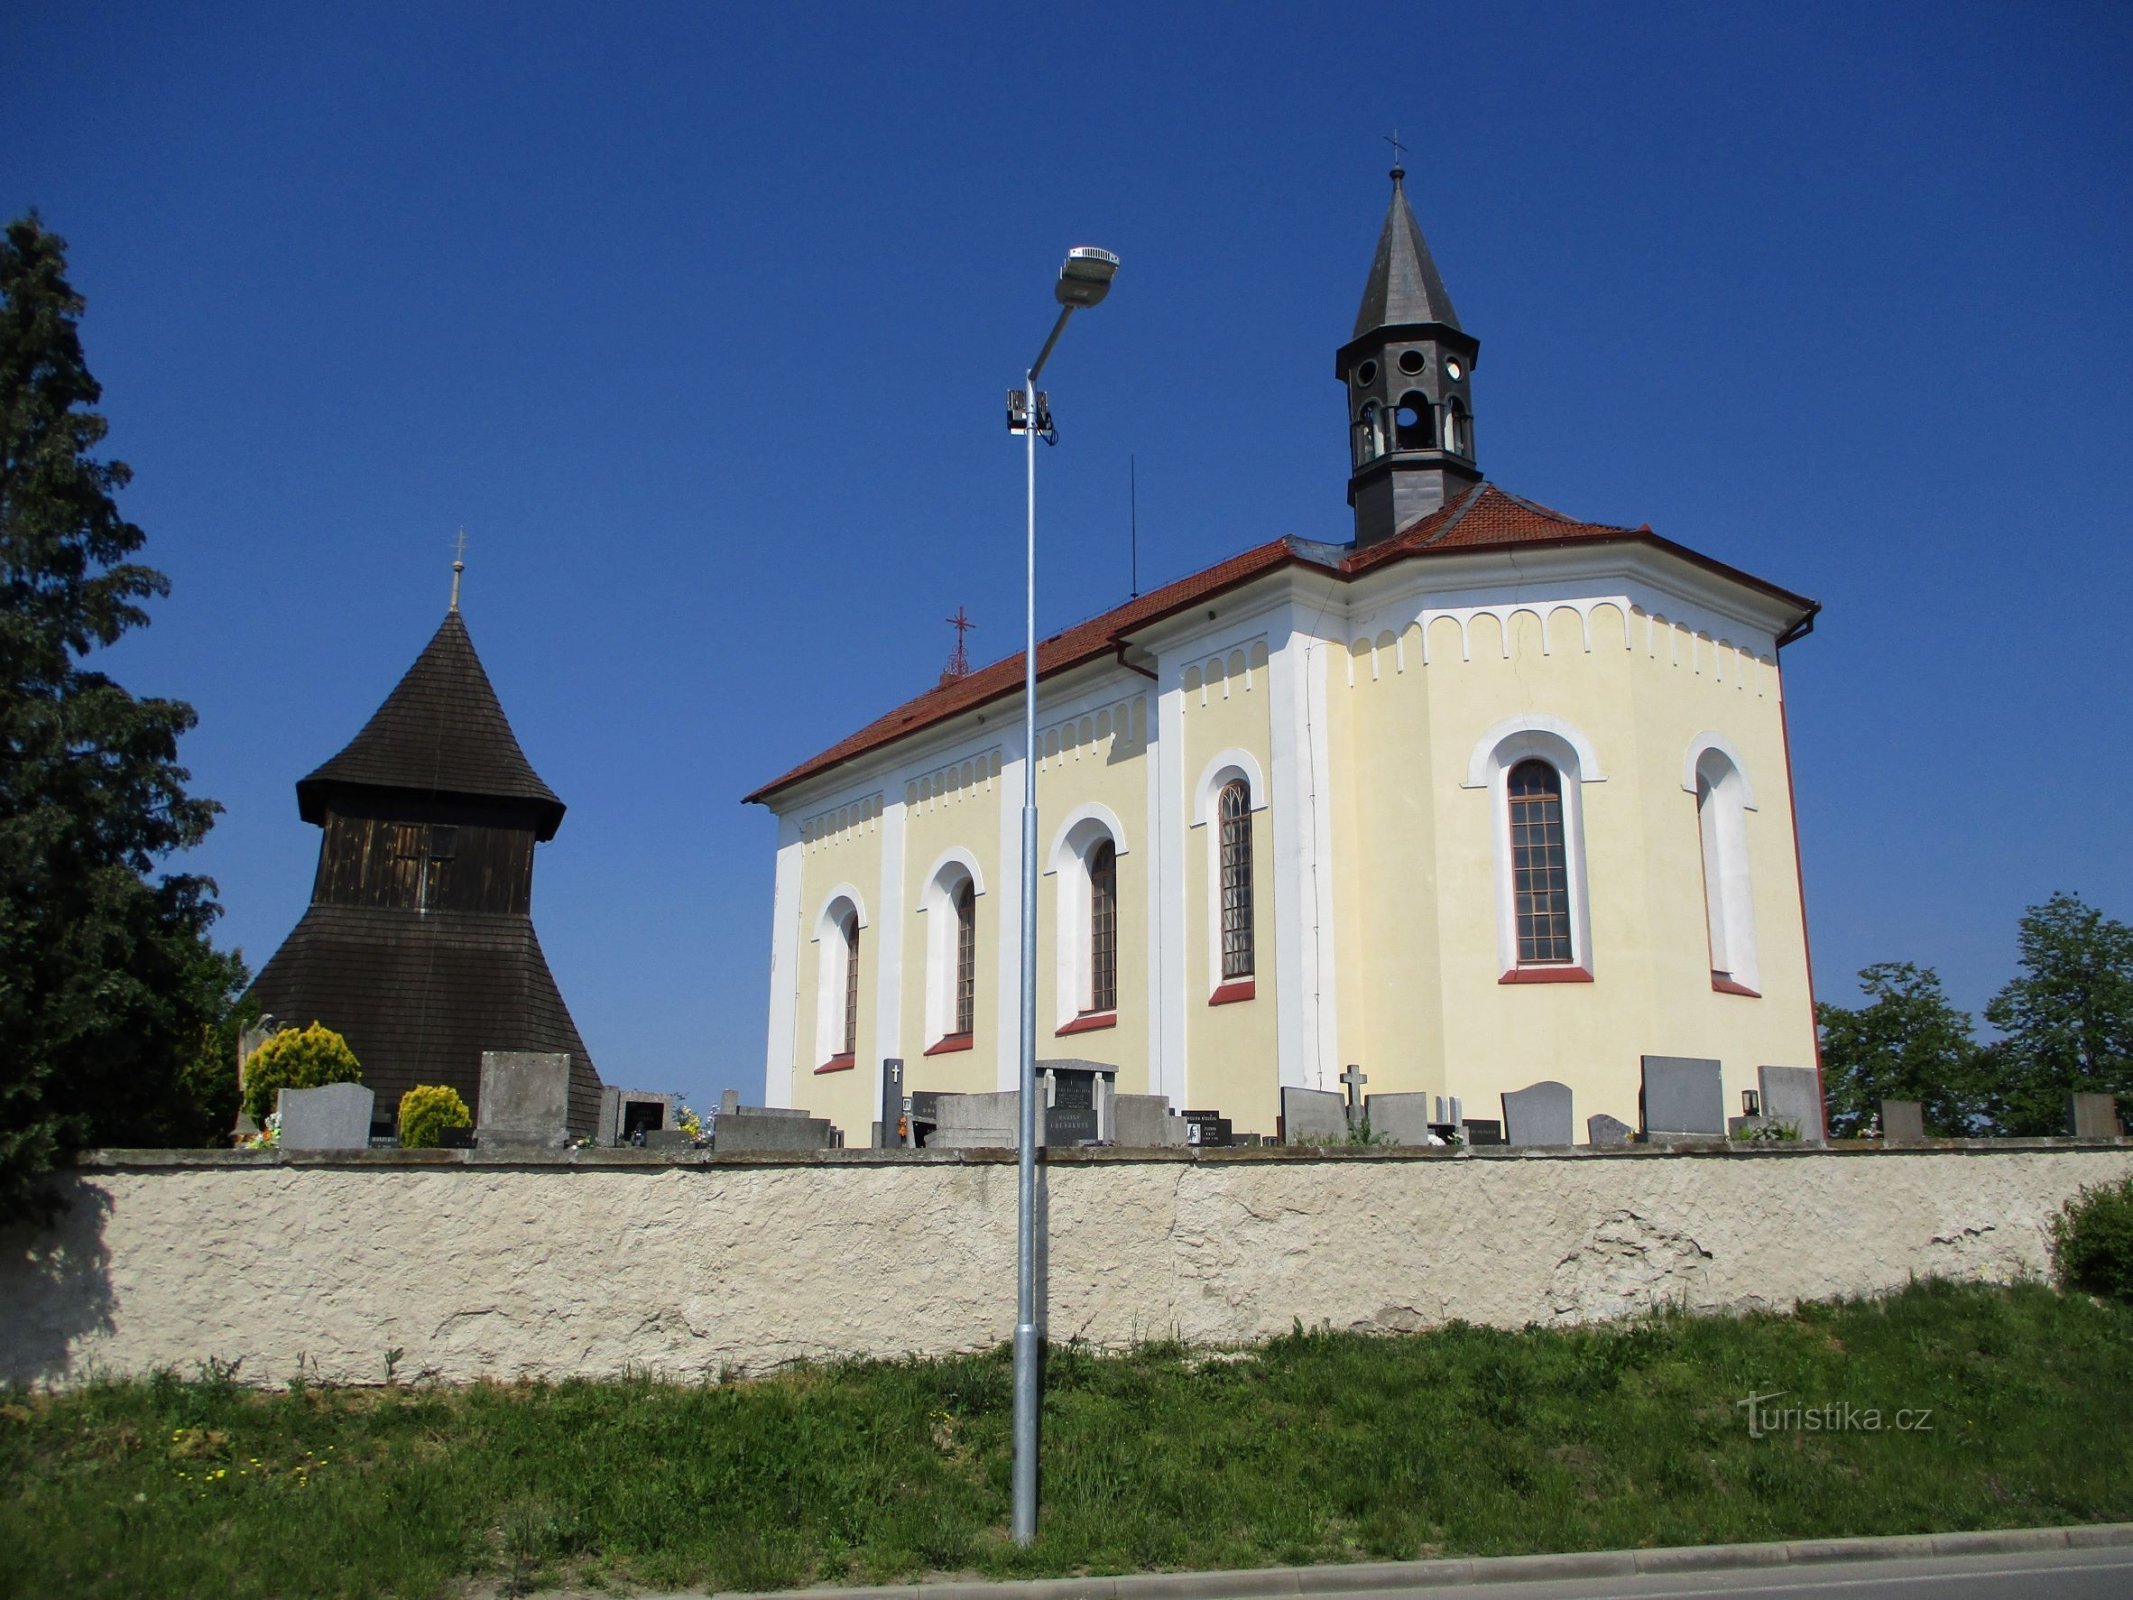 Klokketårnet og kirken St. Wenceslas (Horní Ředice, 16.5.2020/XNUMX/XNUMX)